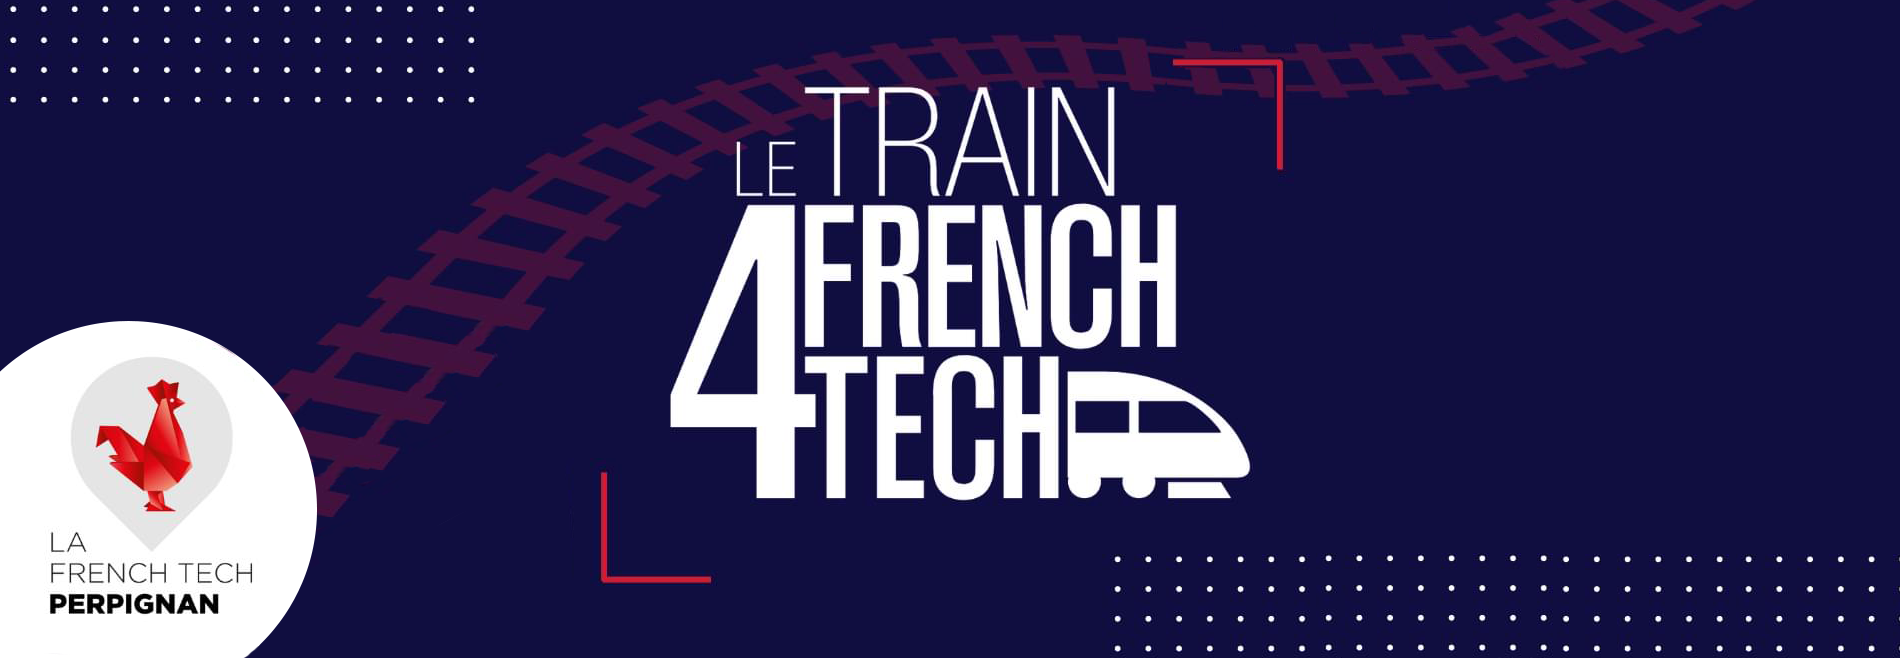 Le train de la French Tech